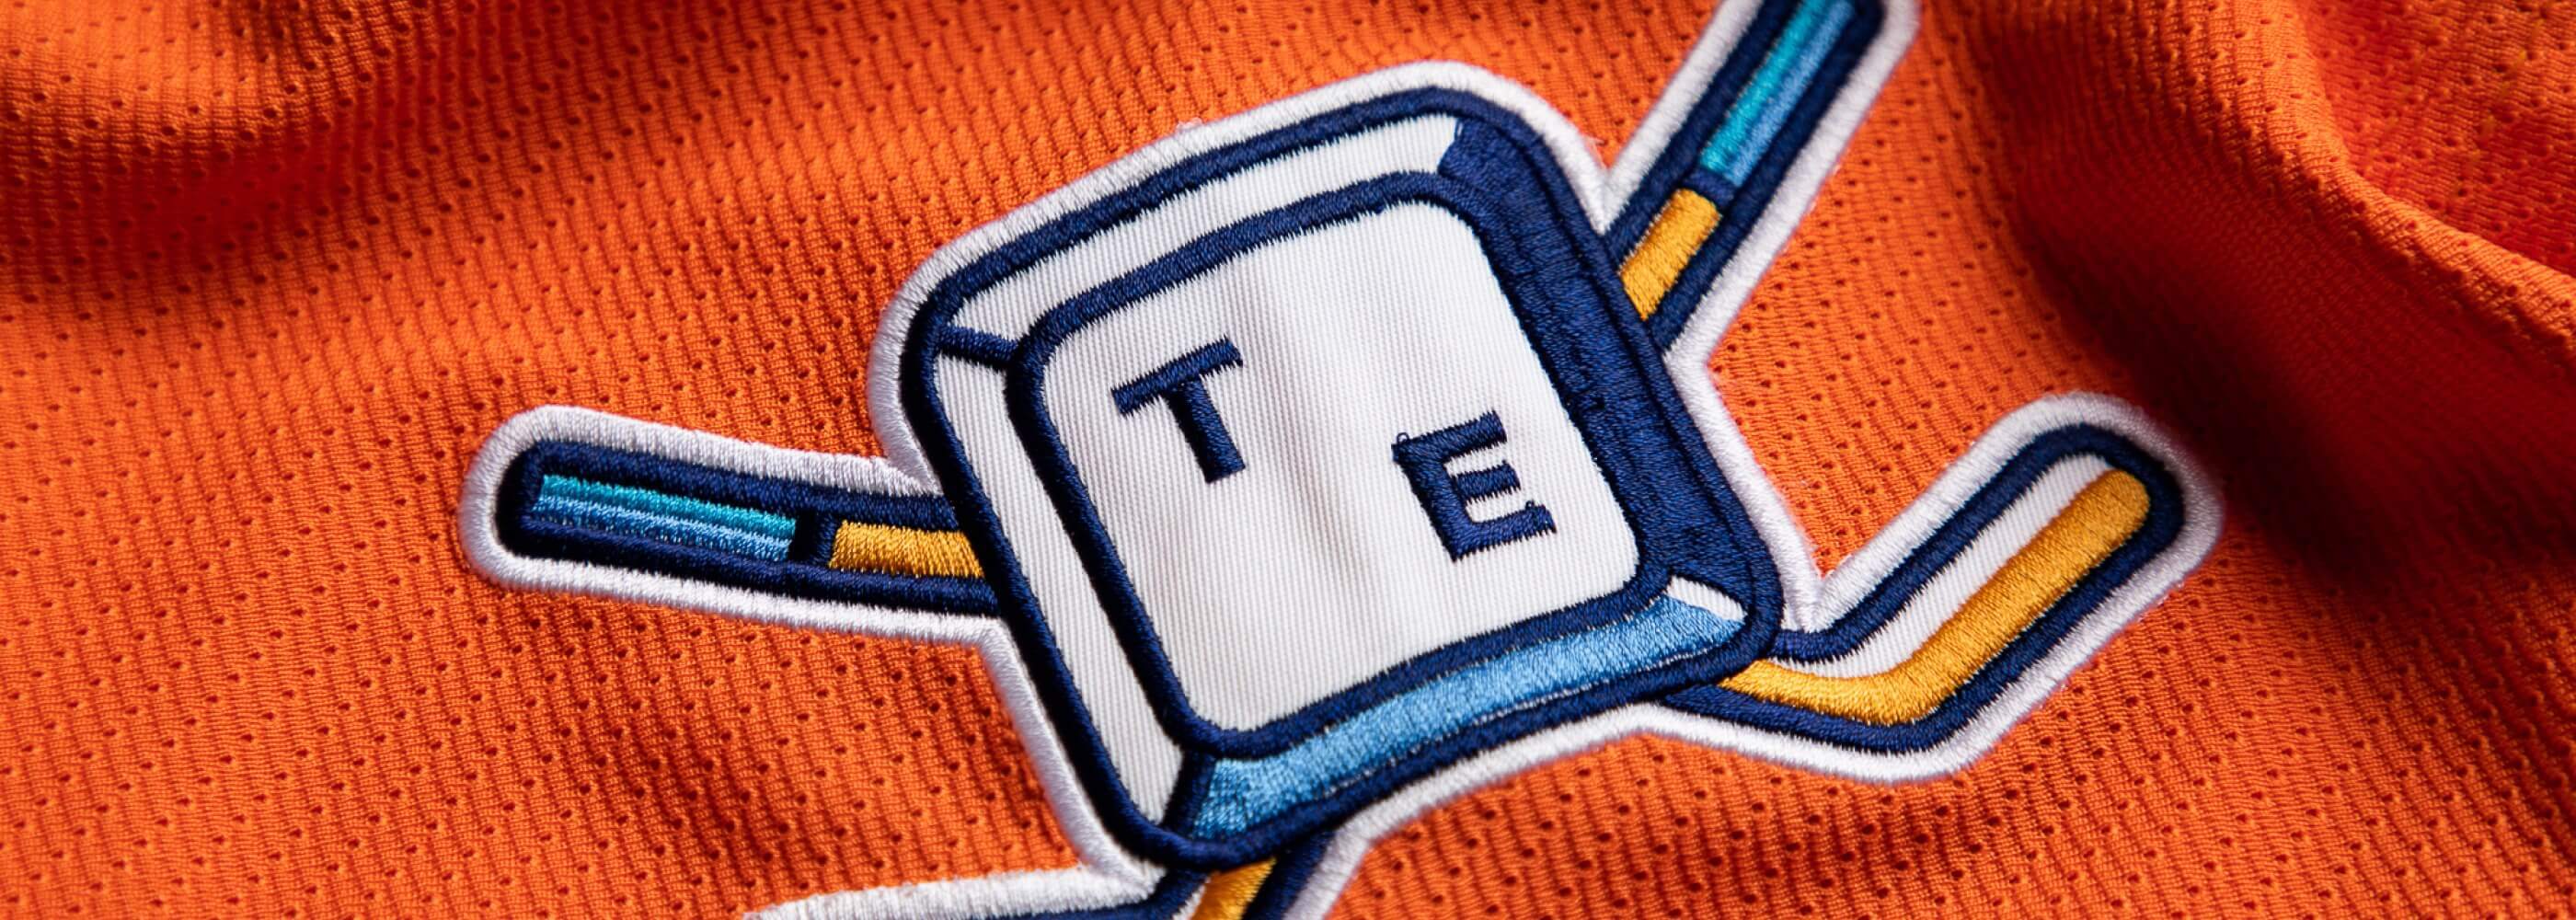 Alternate Team logo on Jersey 